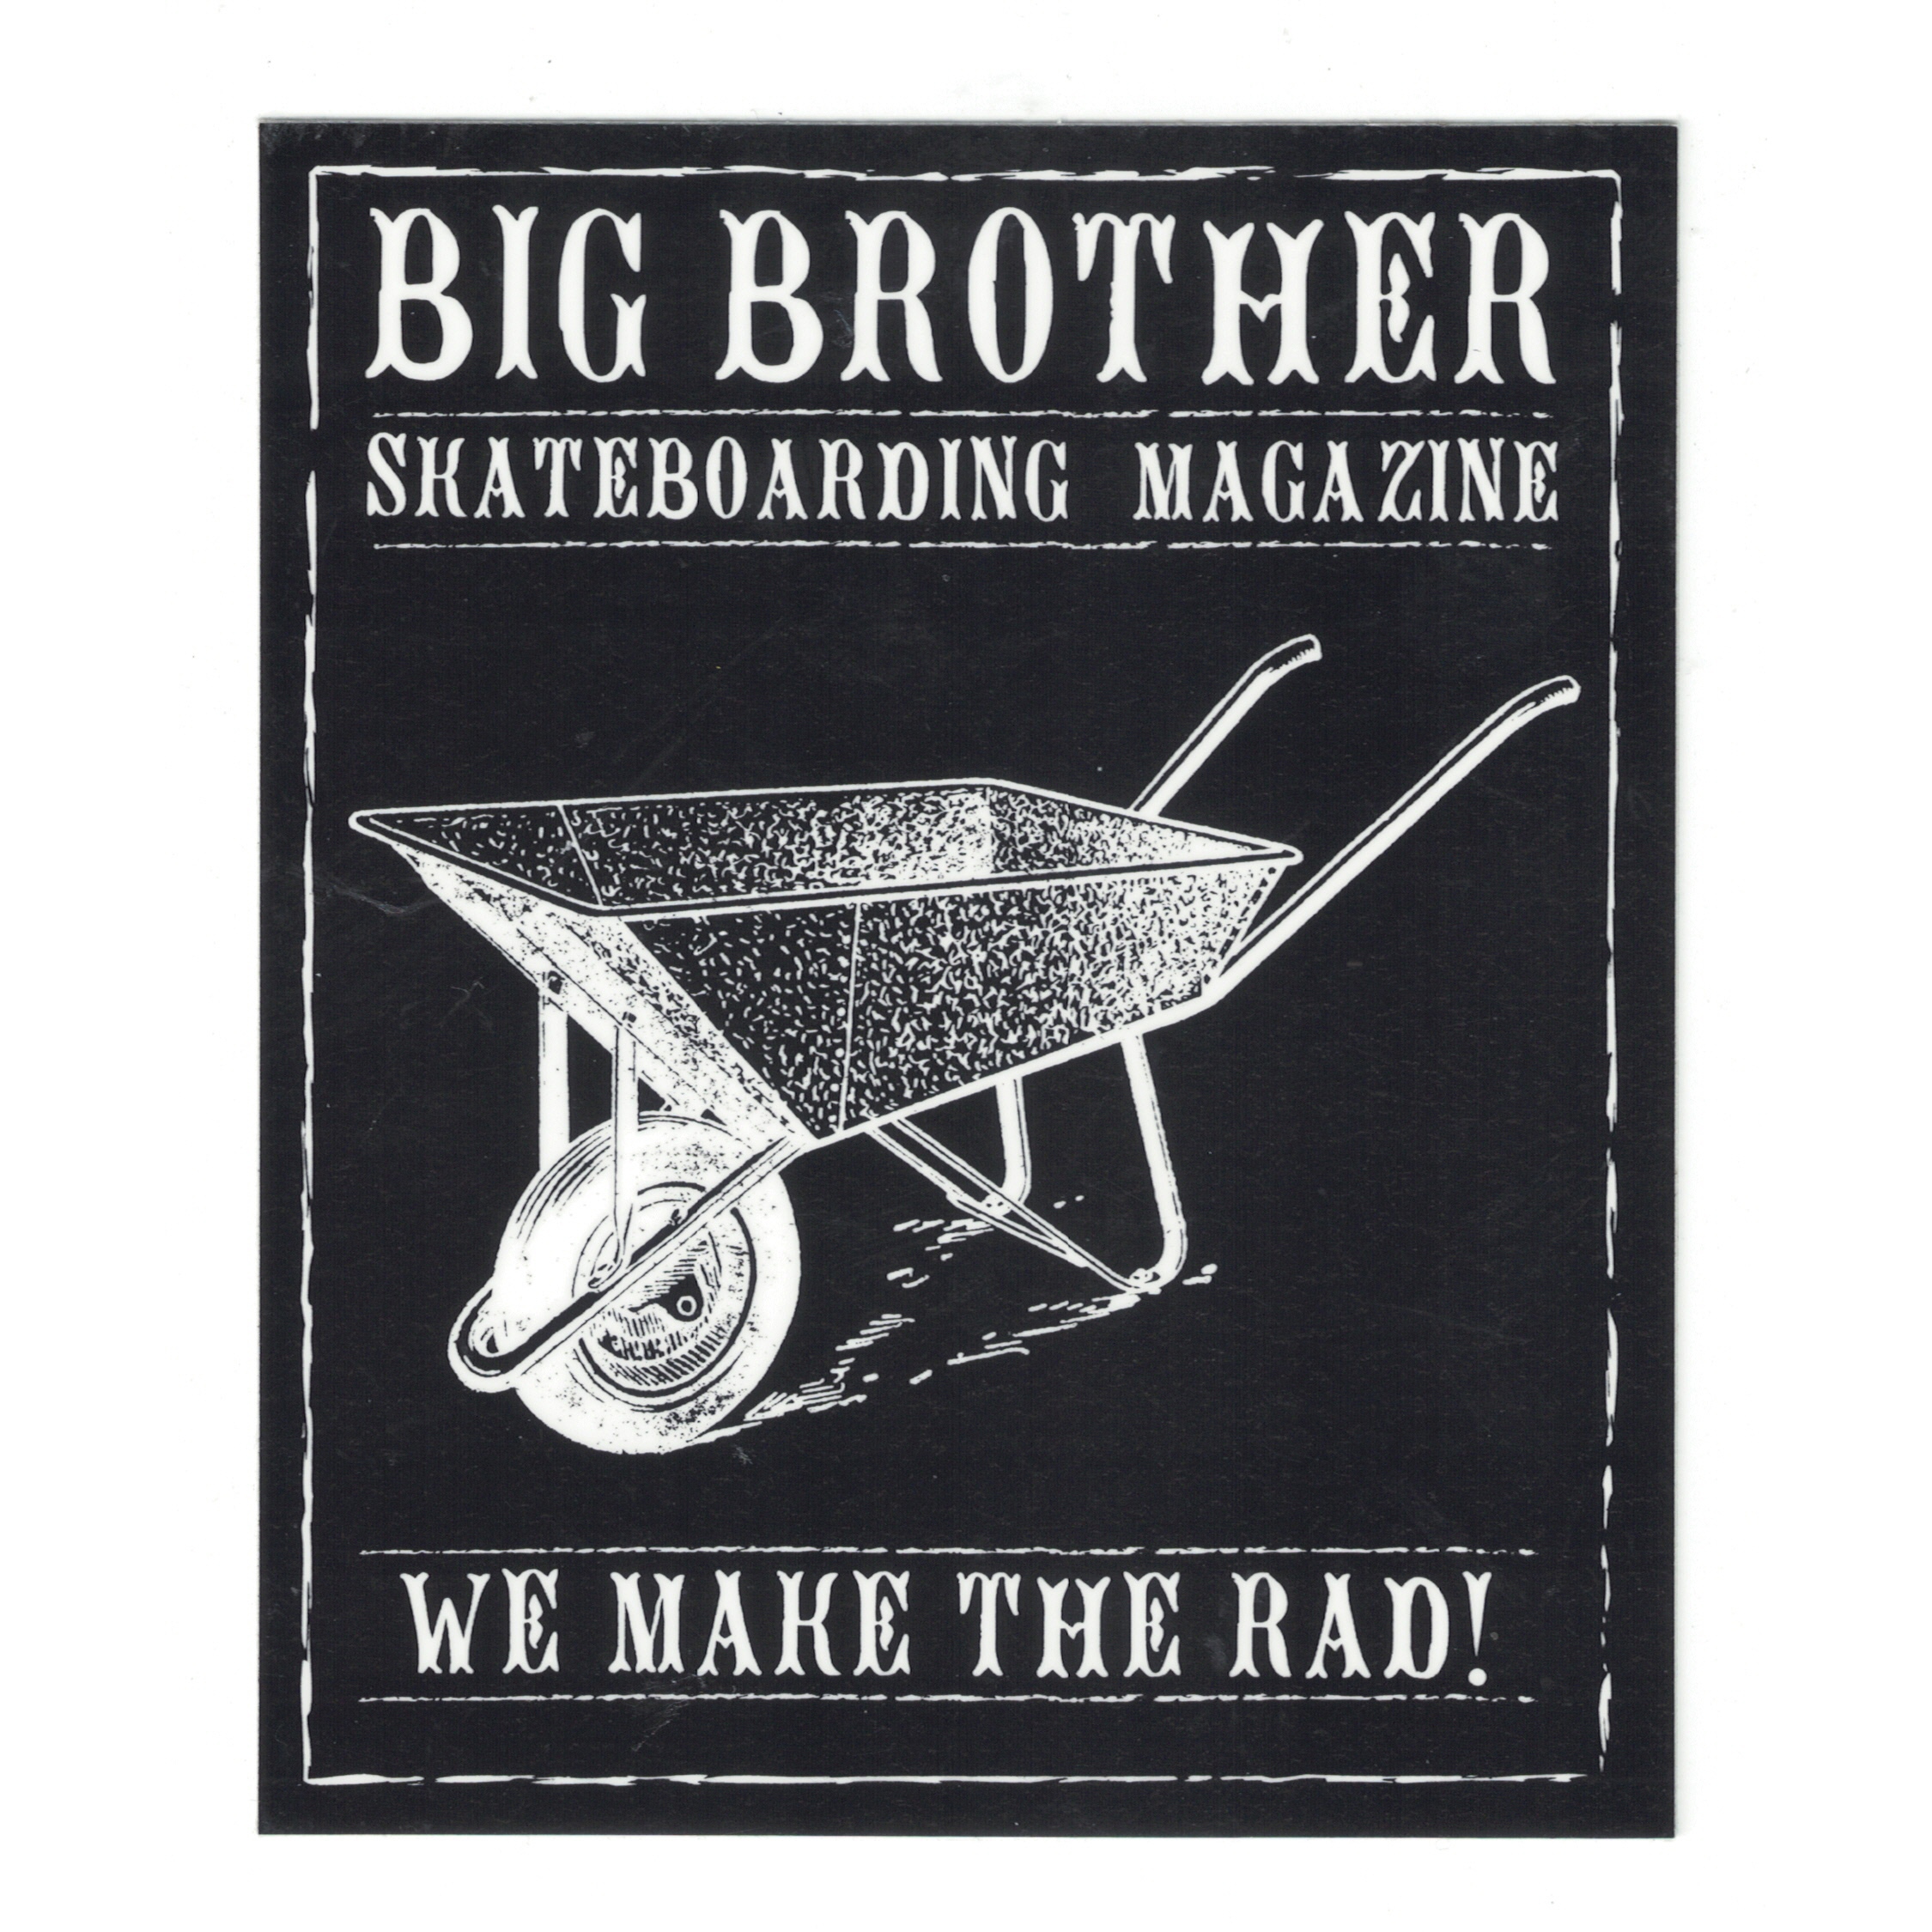 Big Brother Magazine We Make the Rad!